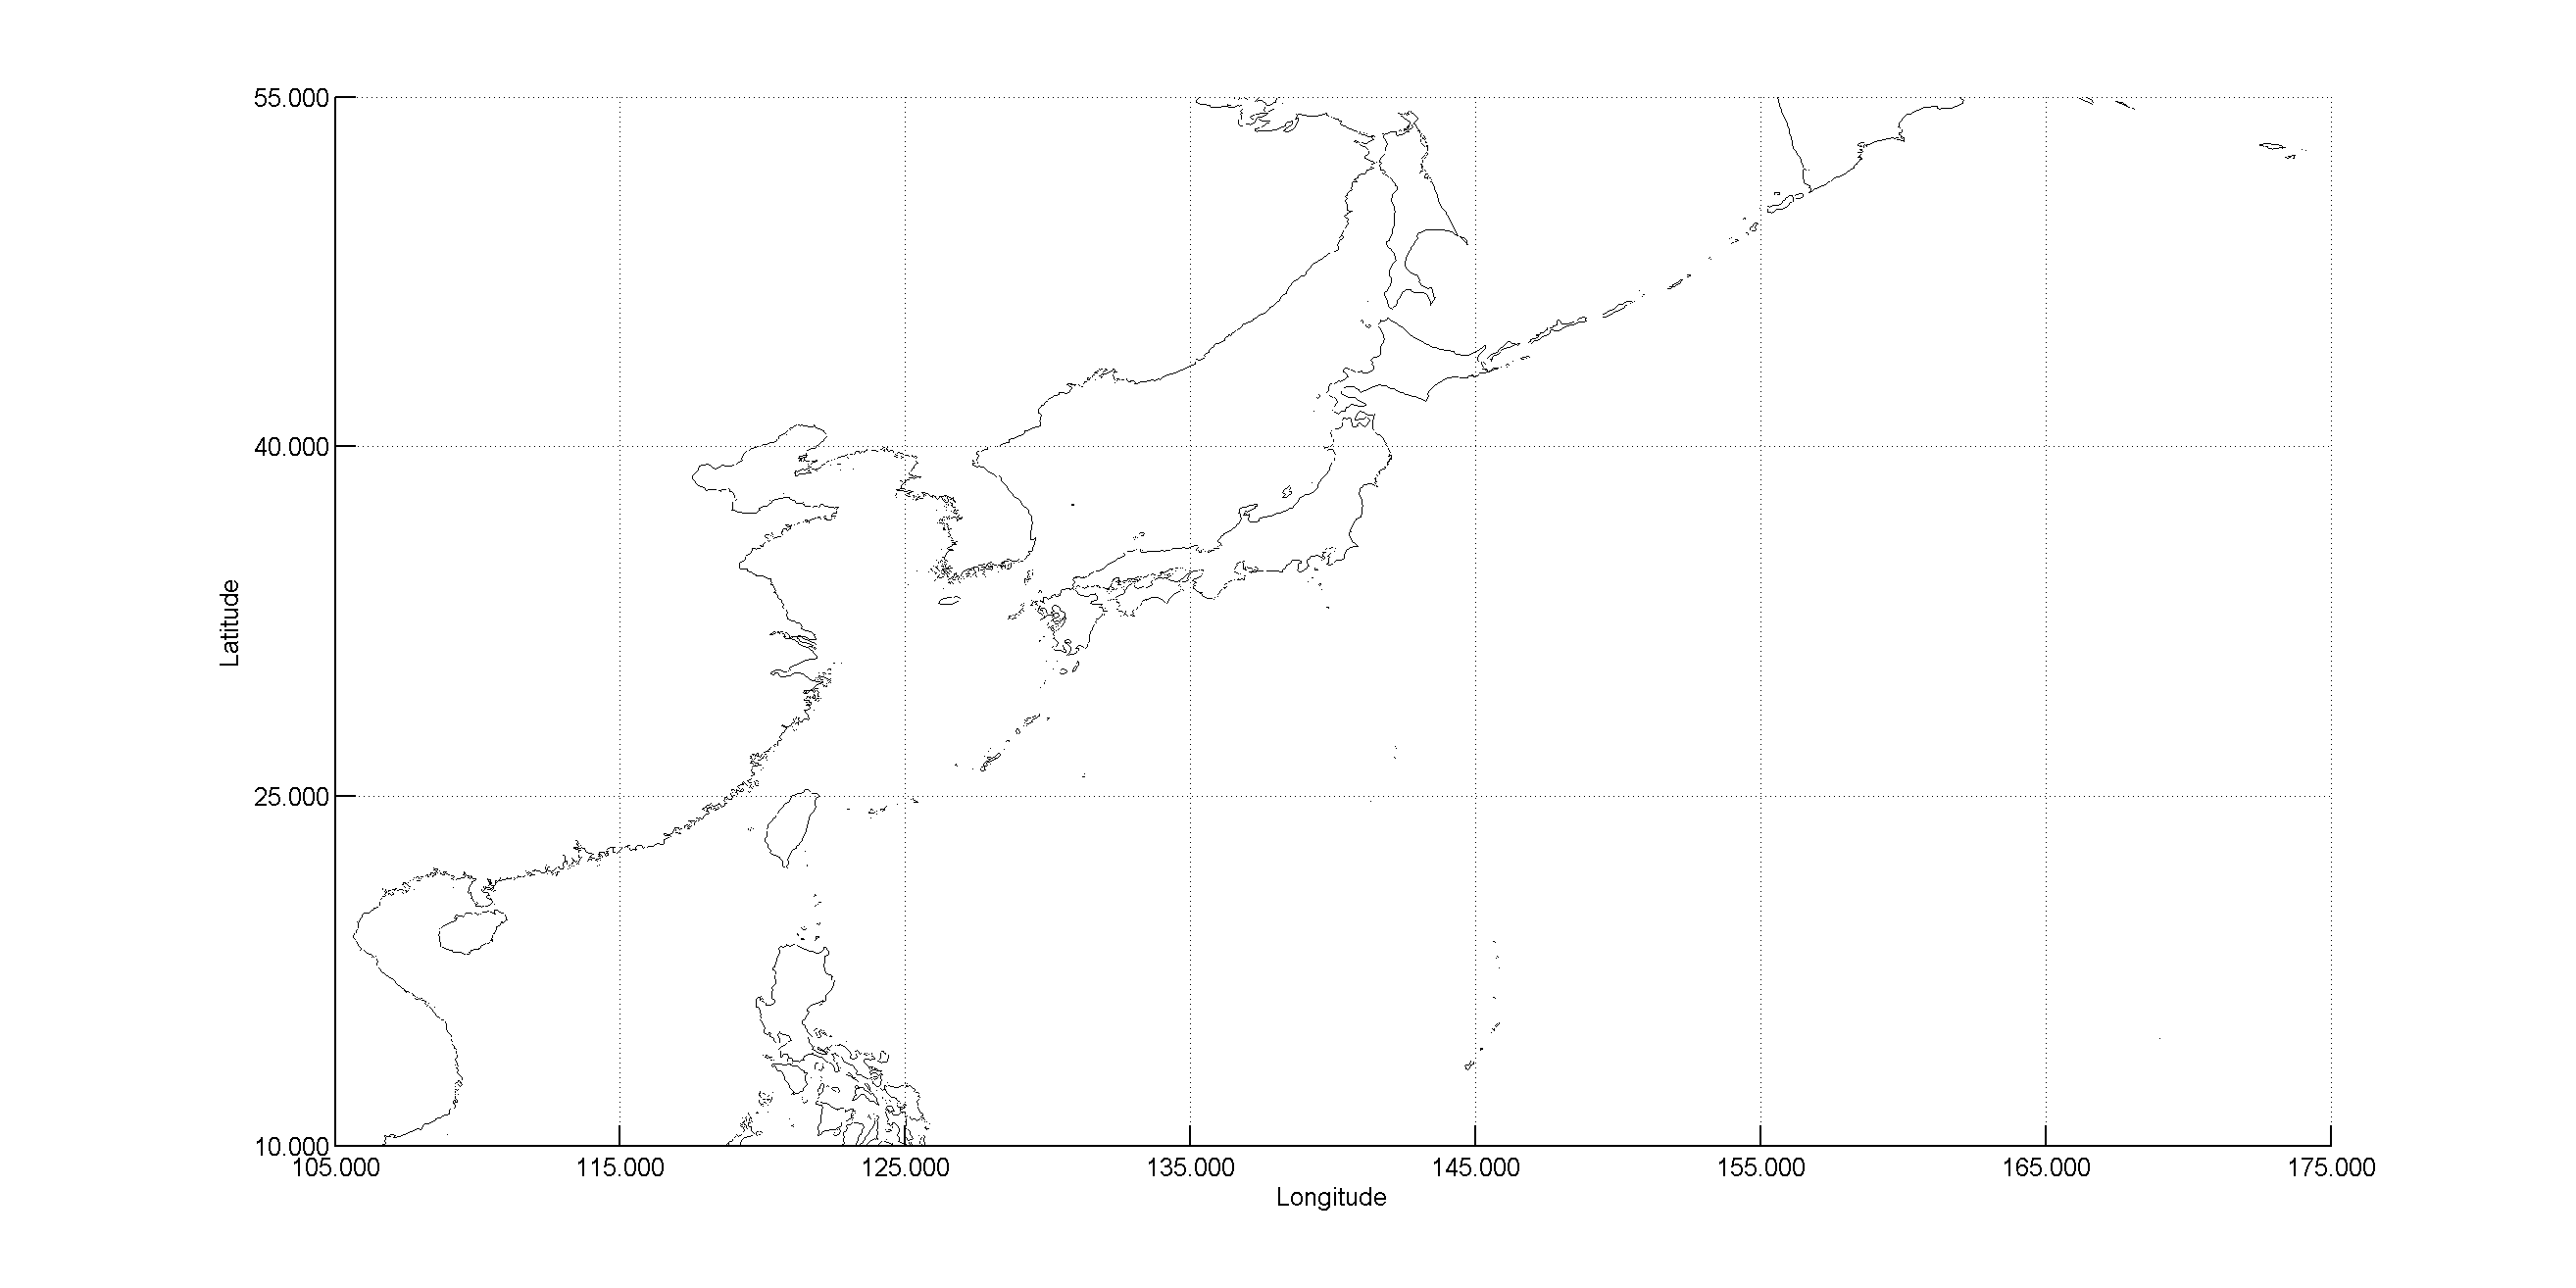 CYCLE_145 - Japan Descending passes